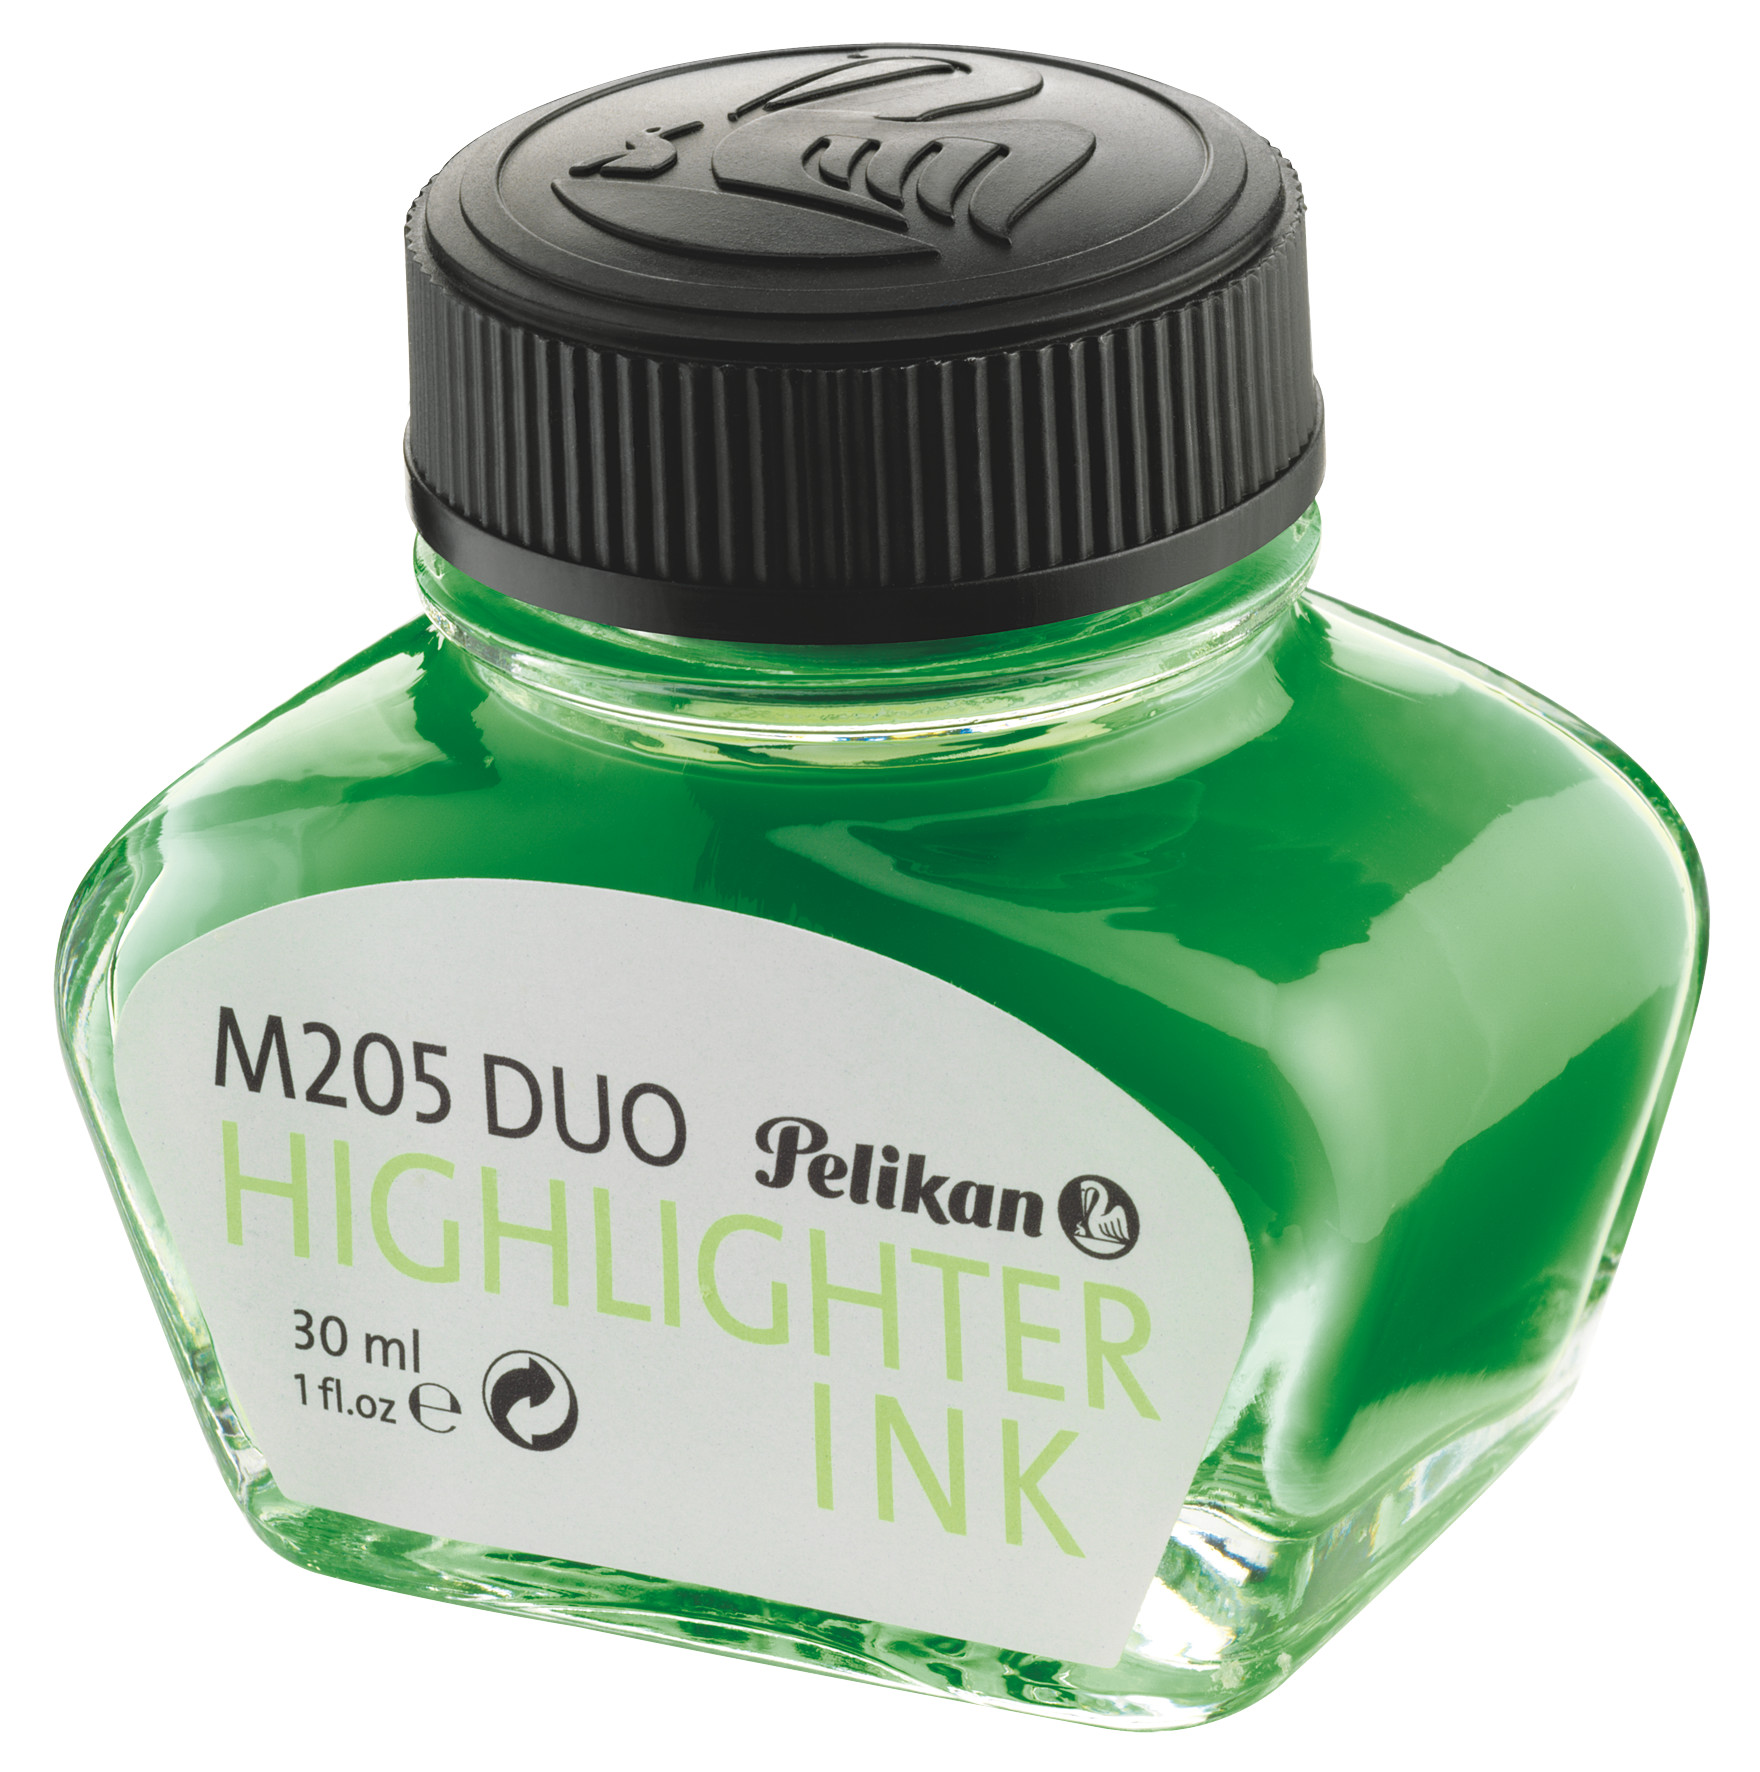 Pelikan Highlighter Ink Bright Green, Glass 30 ml